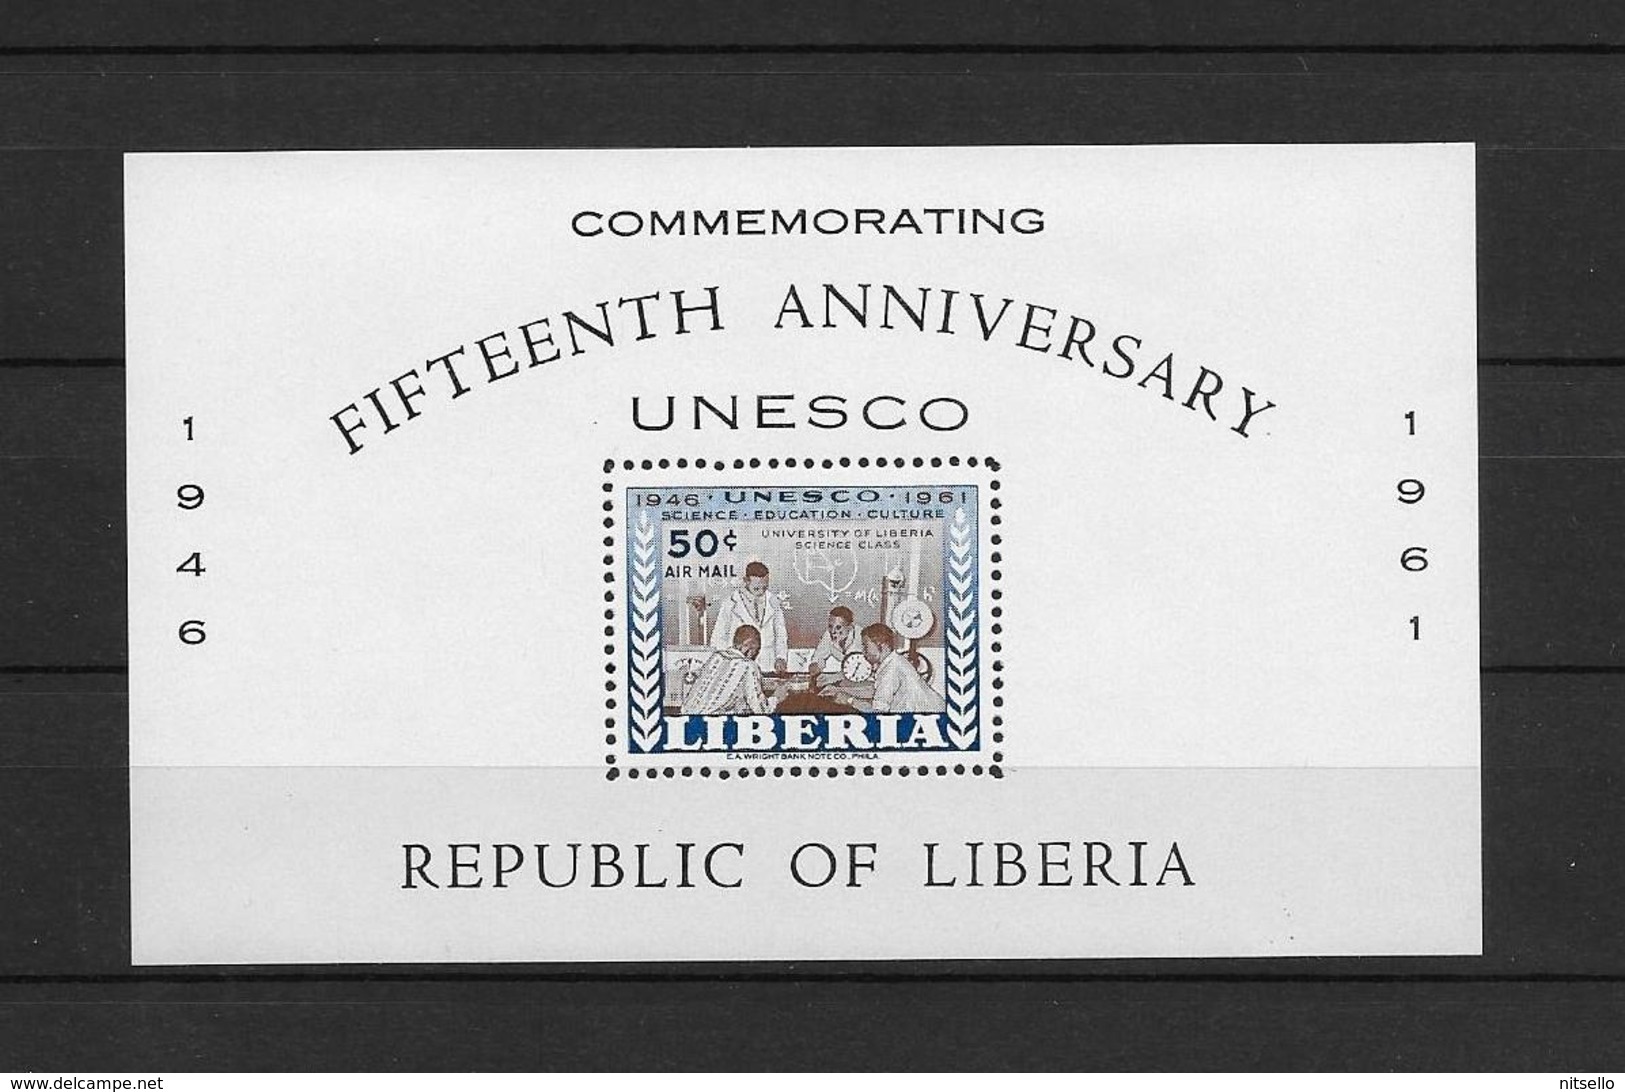 LOTE 1875  ///  (C015)  LIBERIA 1961 HB **MNH    ¡¡¡¡LIQUIDATION !!!! - Liberia